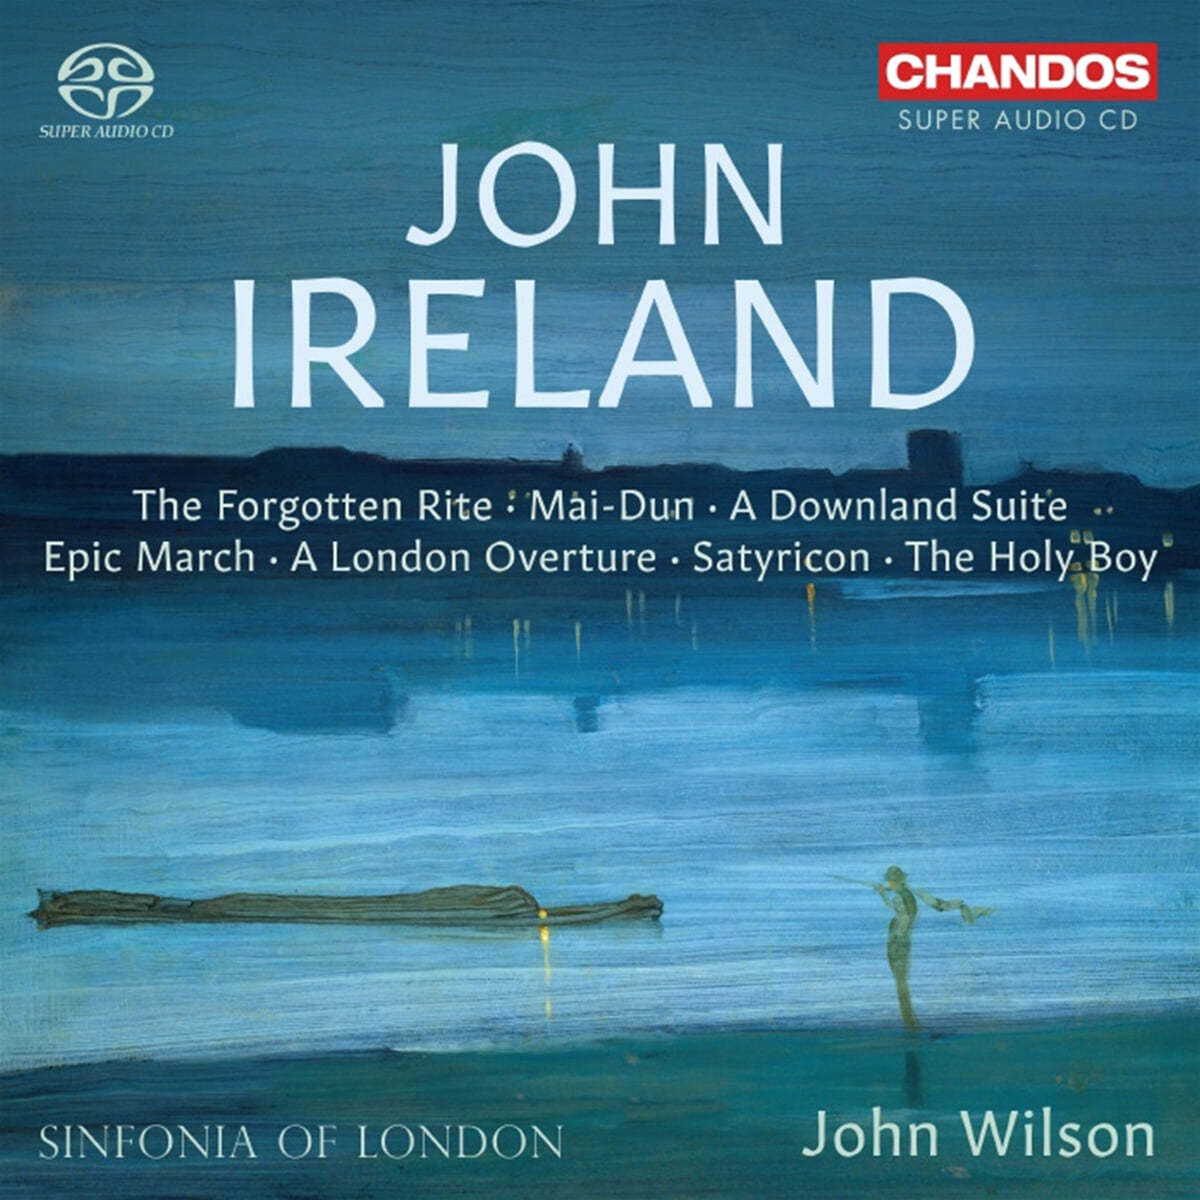 John Wilson 존 아일랜드: 관현악 작품집 (John Ireland: Orchestral Works)